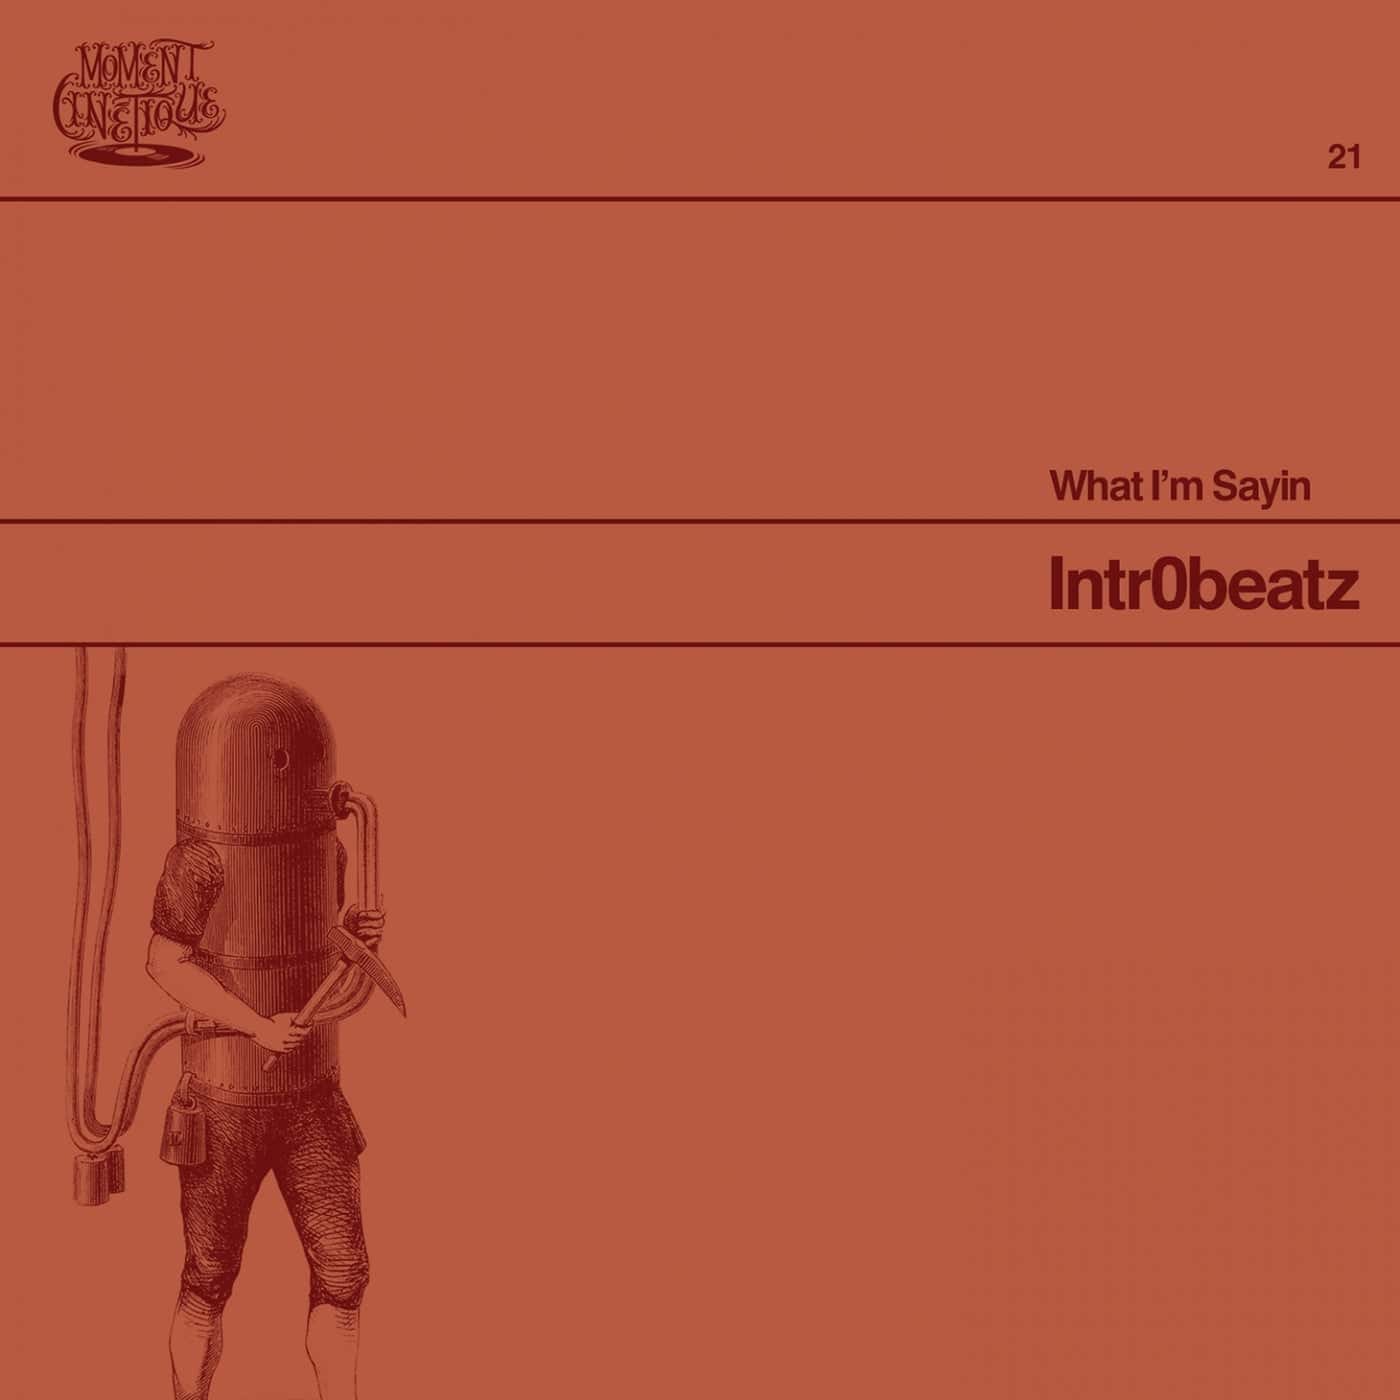 Download Intr0beatz - What I'm Sayin on Electrobuzz